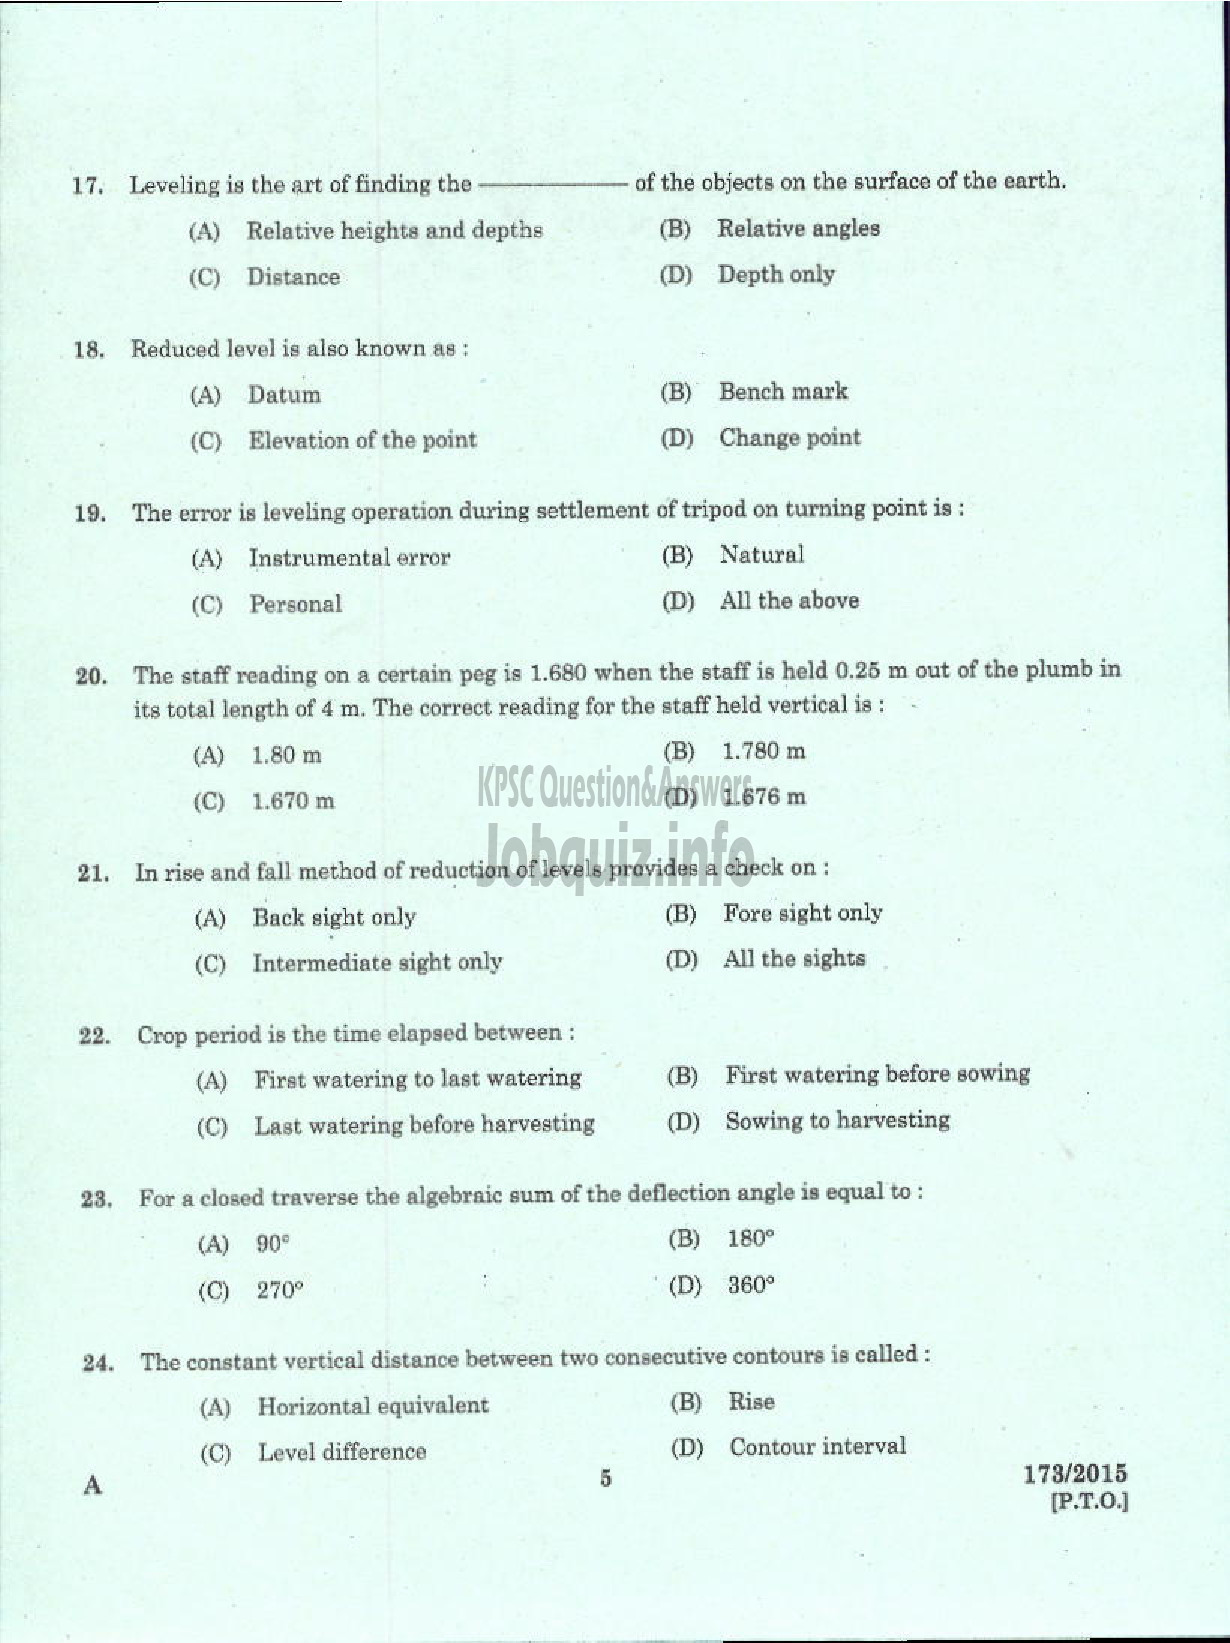 Kerala PSC Question Paper - SURVEYOR GR II SR FOR SC/ST SURVEY AND LAND RECORDS-3